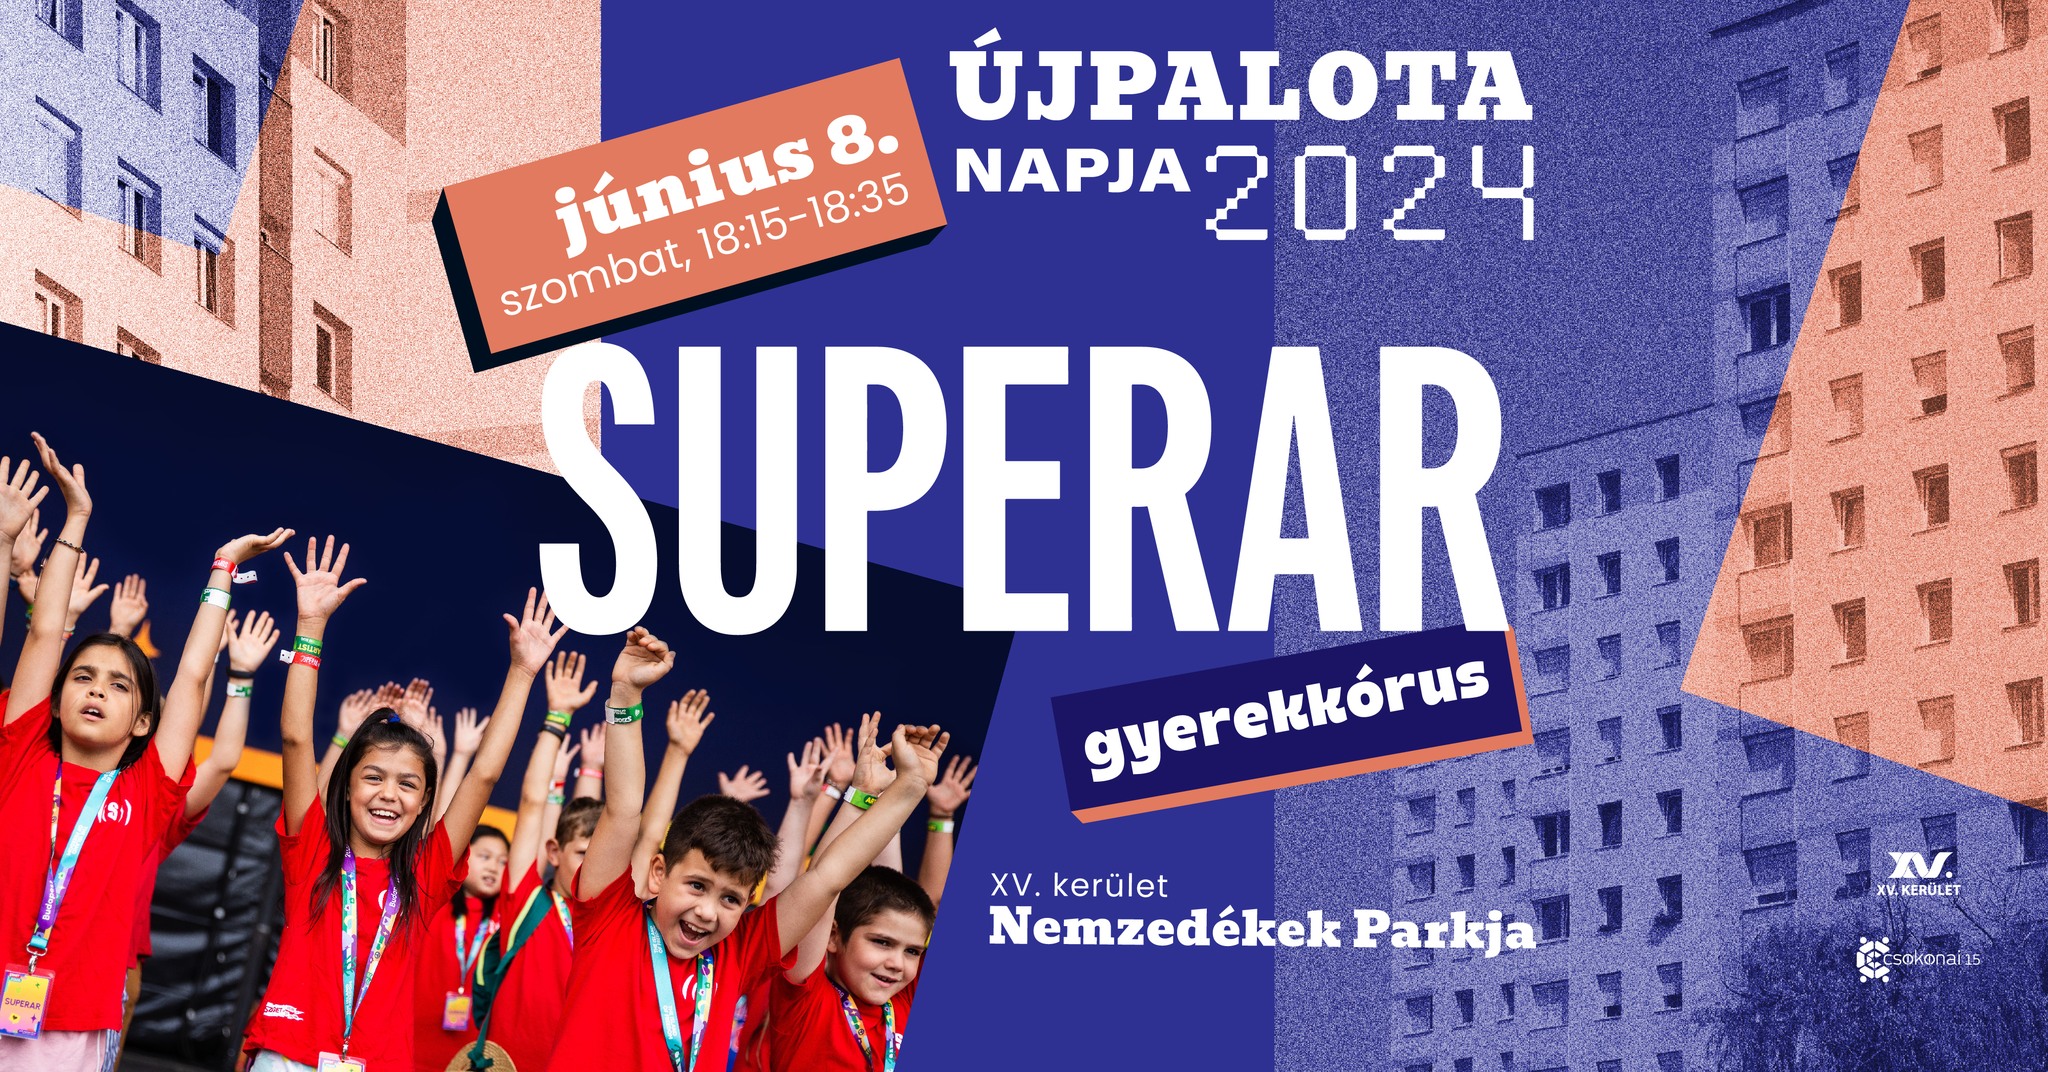 Featured image for “Superar Újpalota Napján”